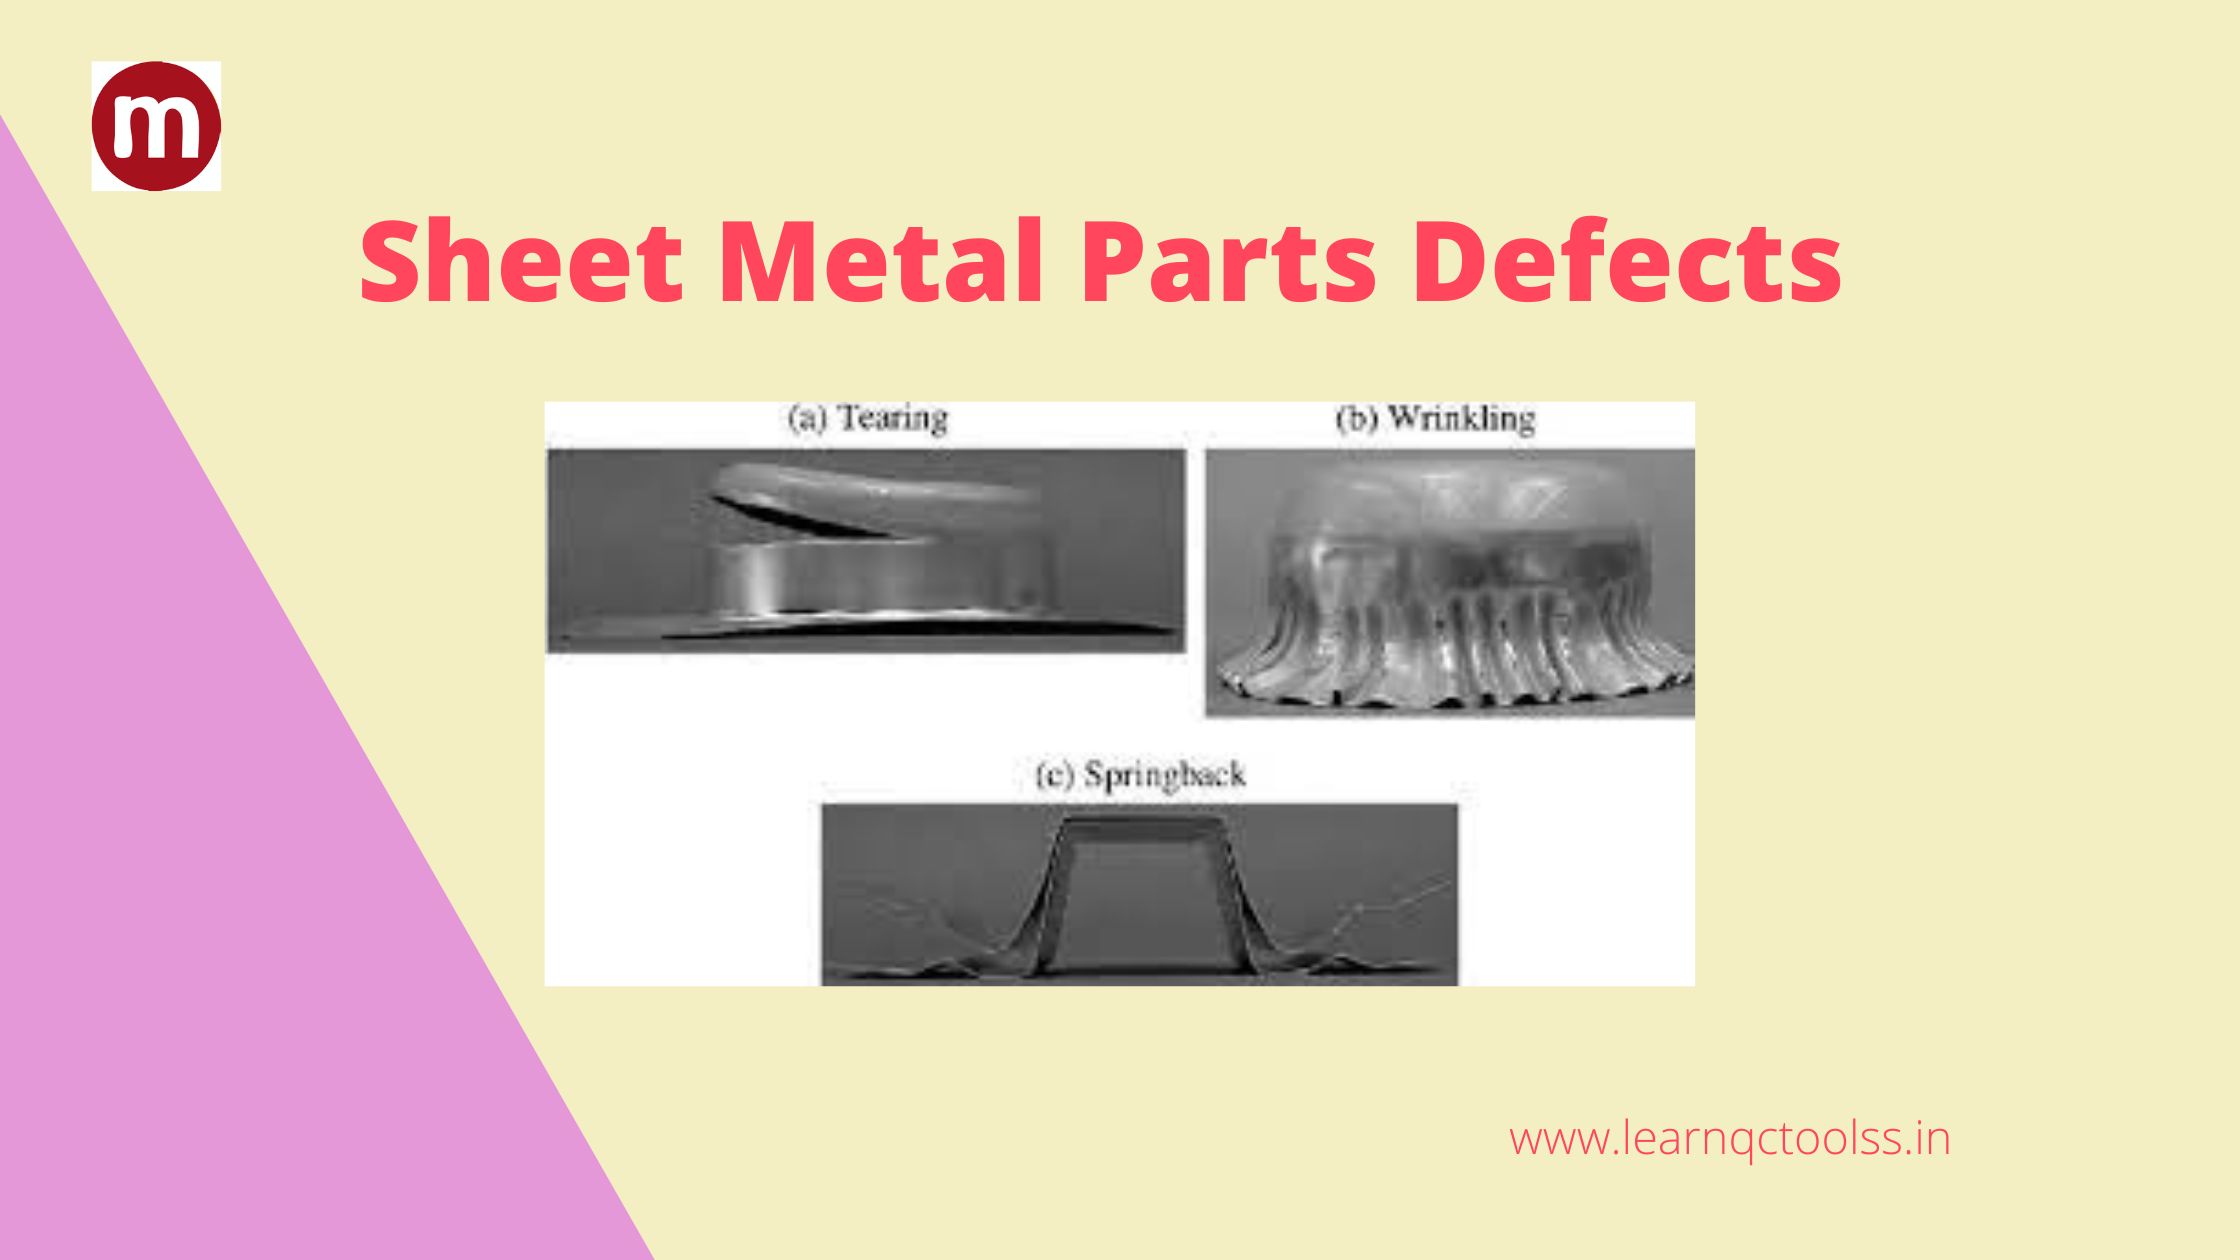 Sheet Metal Parts Defects